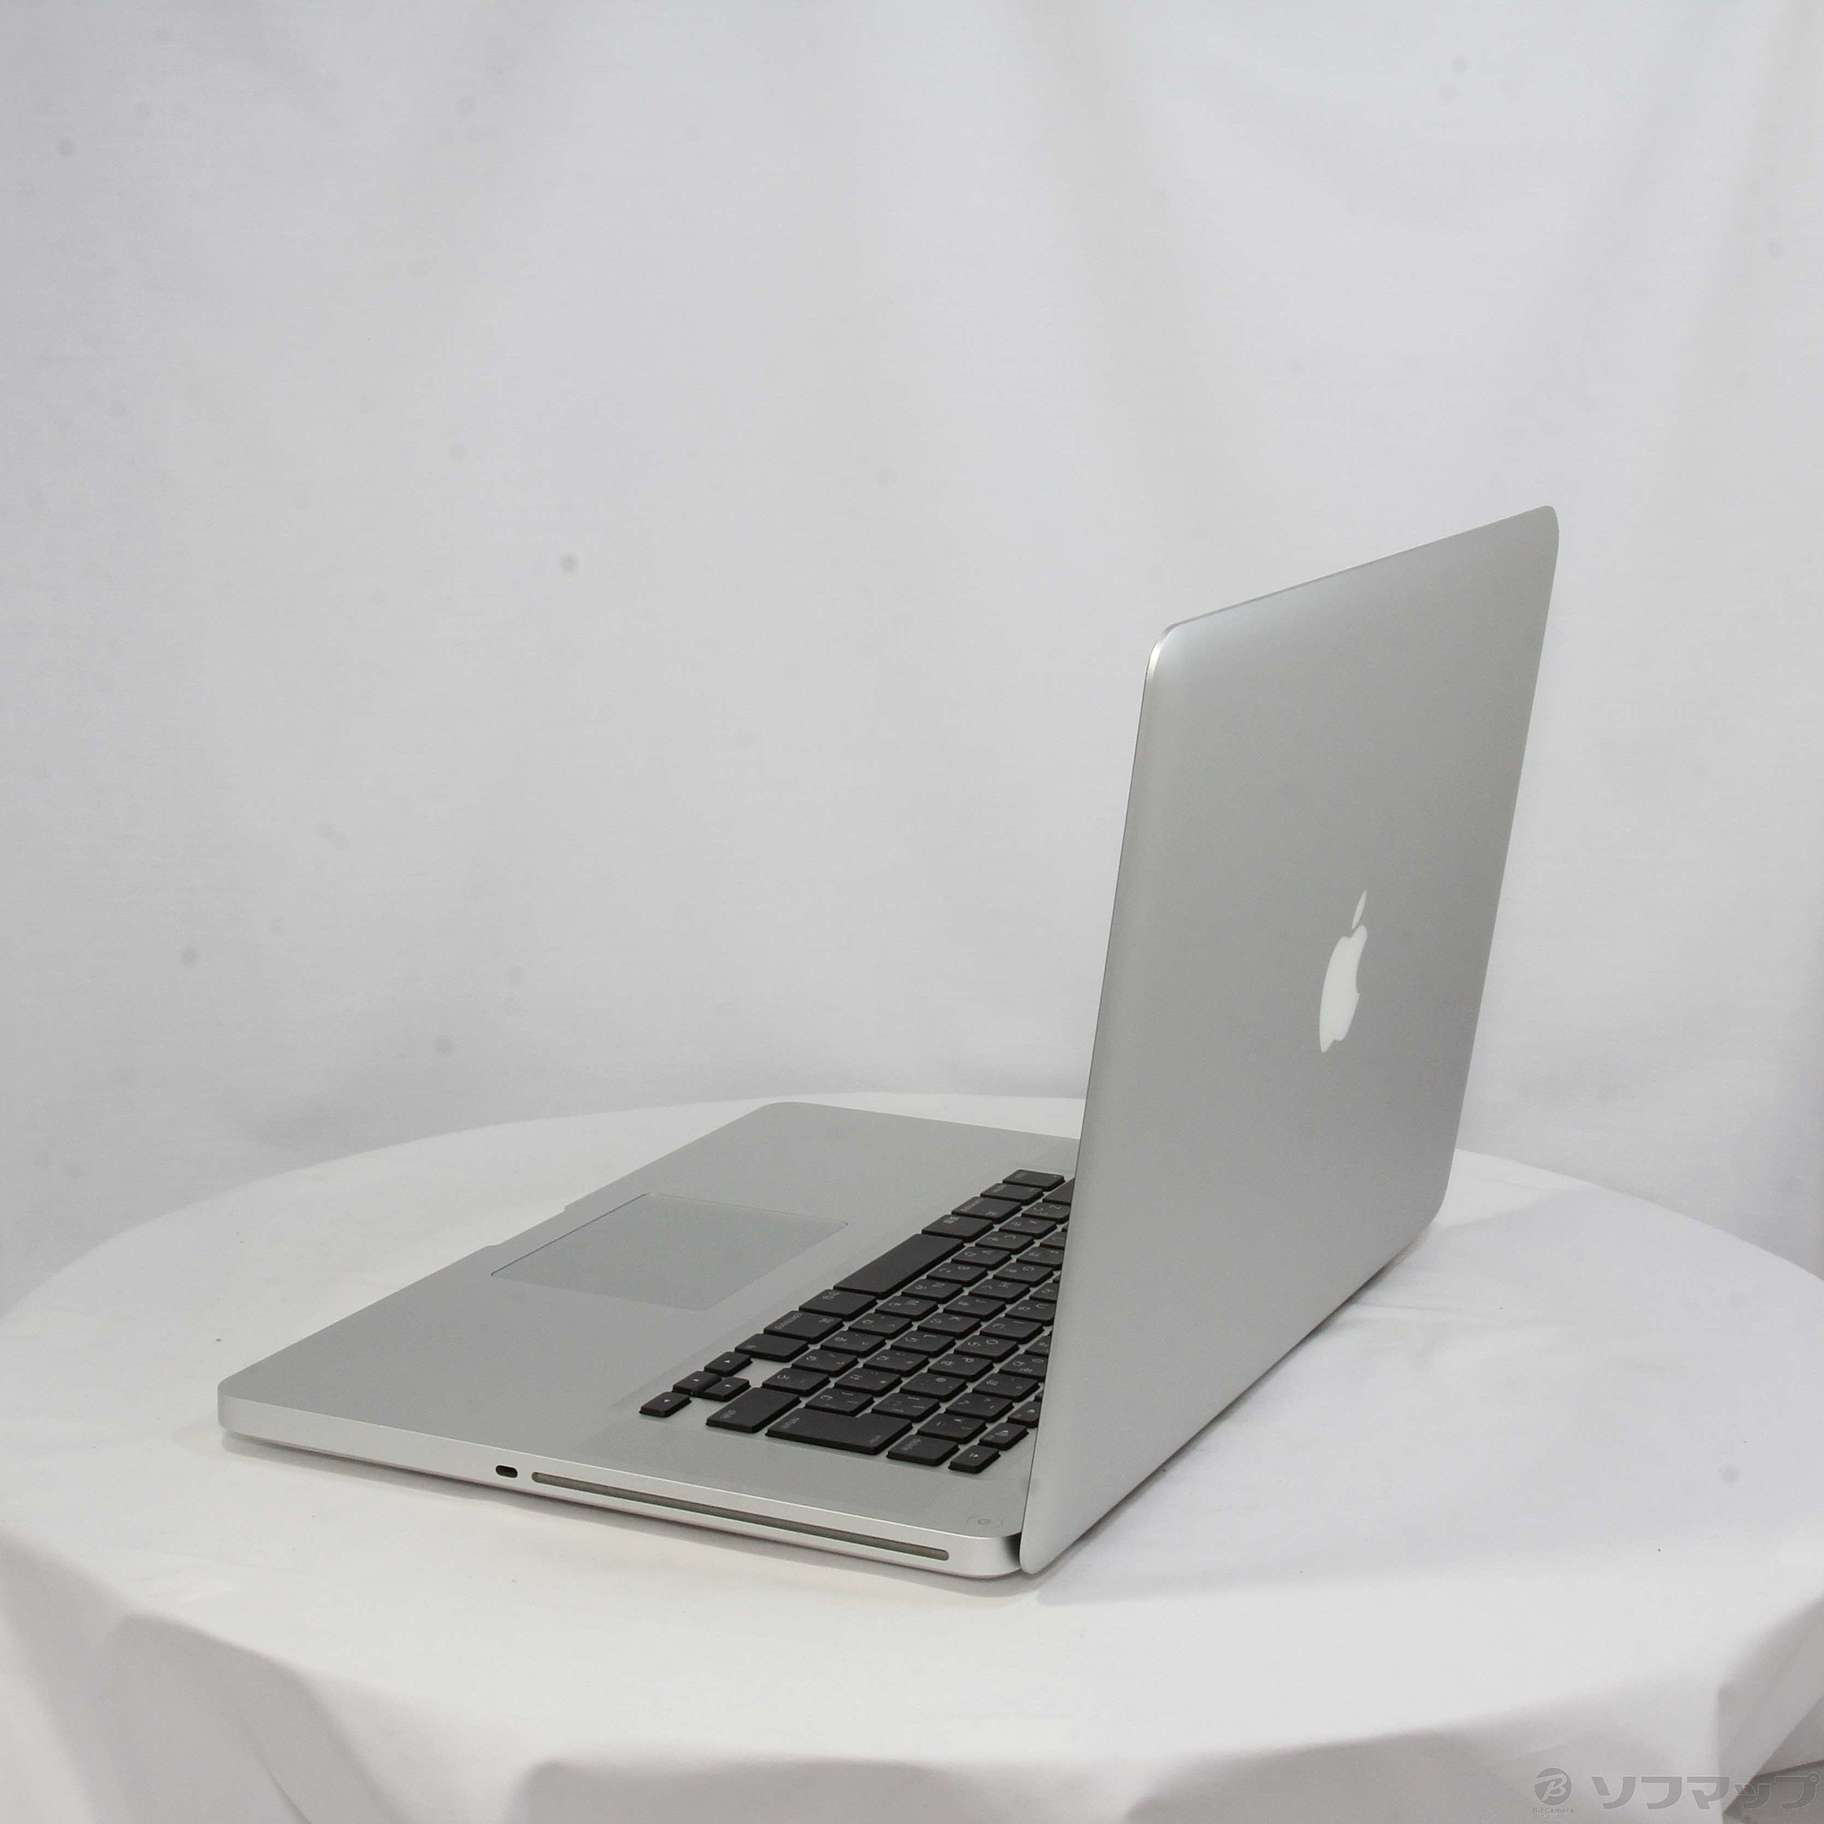 中古】MacBook Pro 15-inch Mid 2012 MD103J／A Core_i7 2.3GHz 4GB